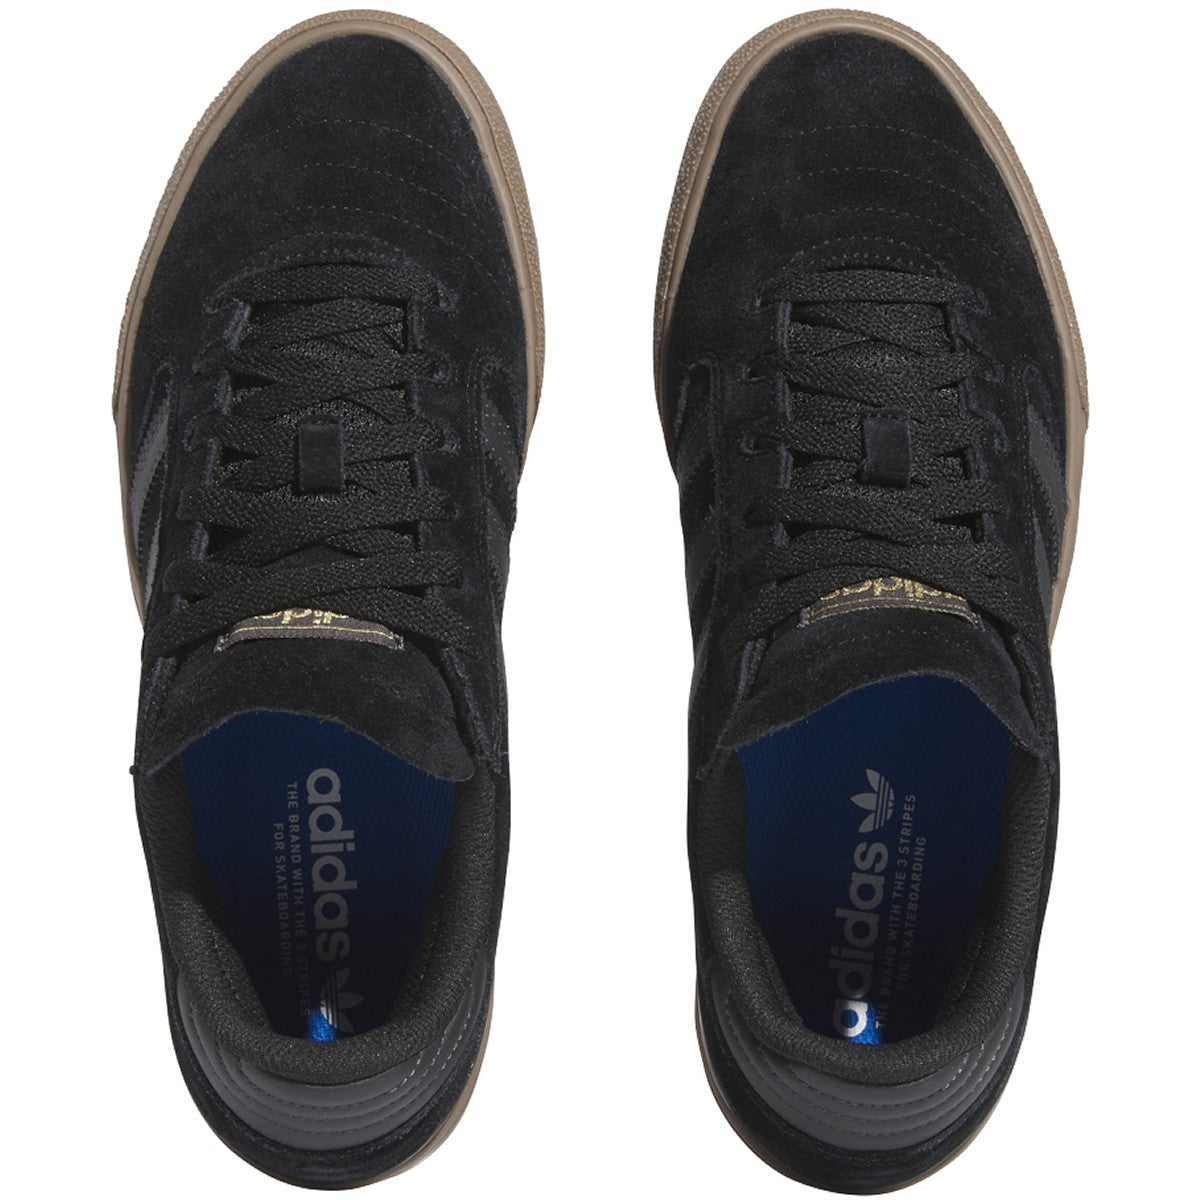 Core Black/Gum Busenitz Vulc II Adidas Skate Shoe Top